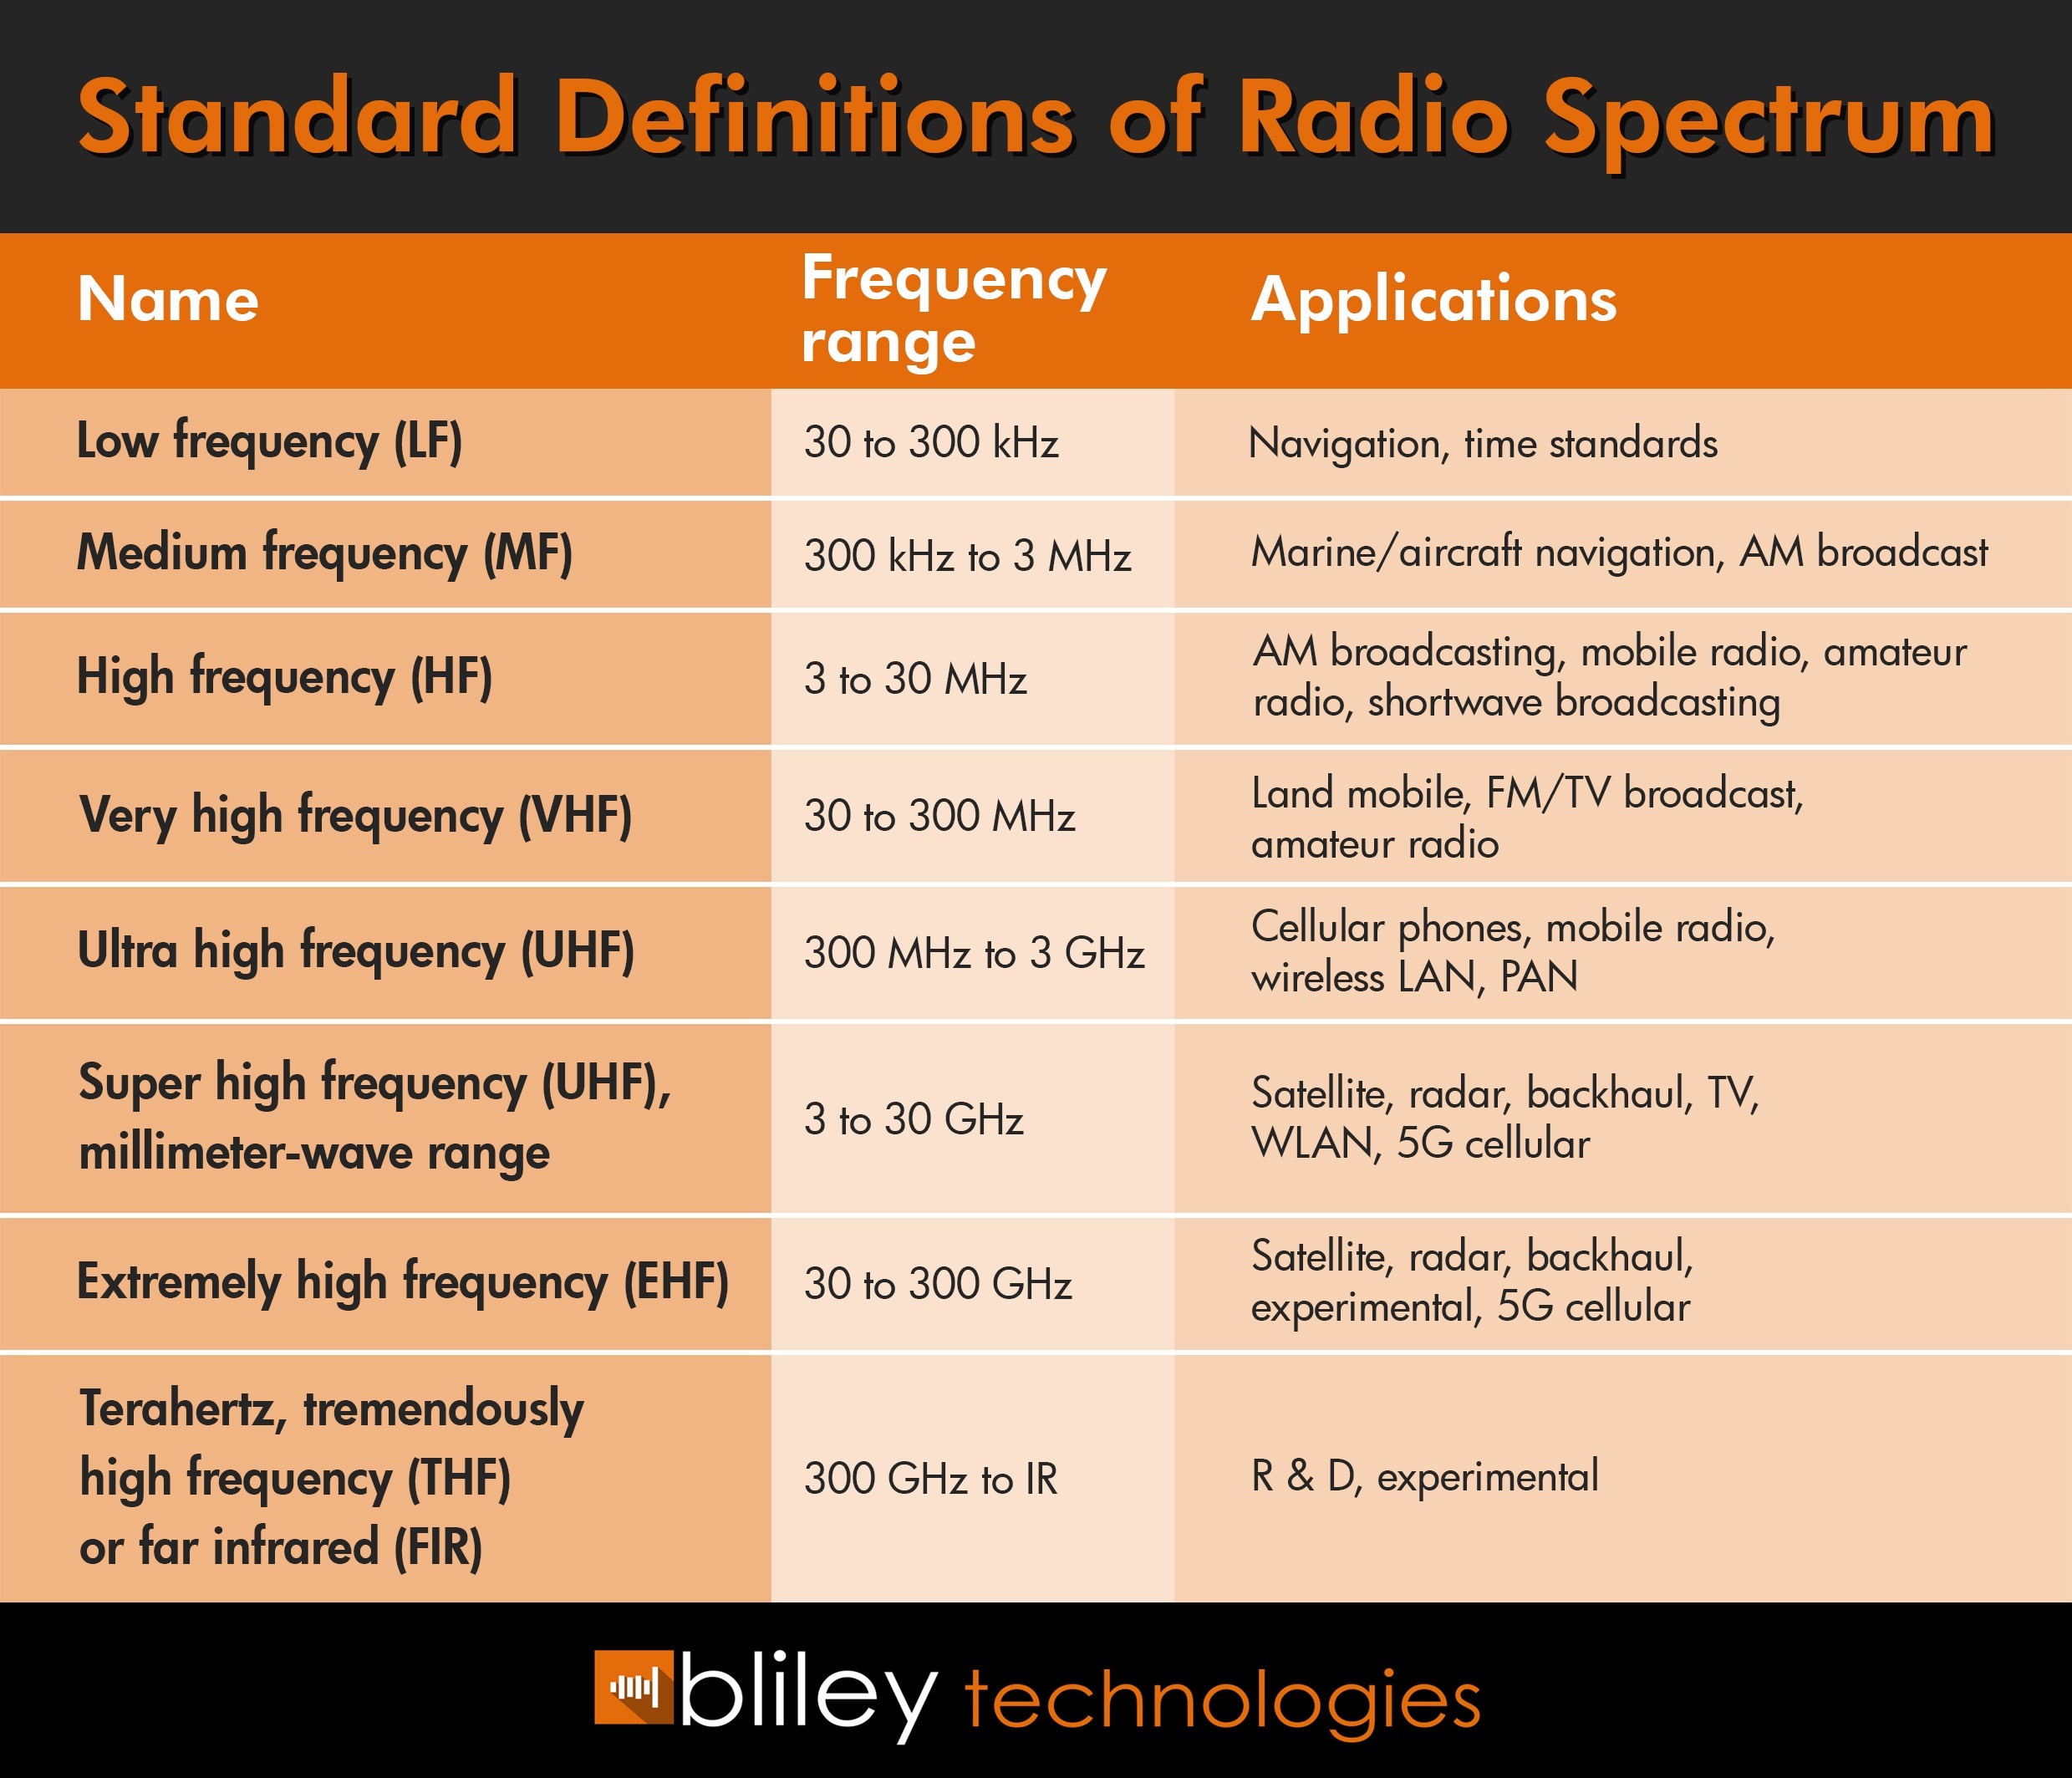 spectrum bandwidth speed test